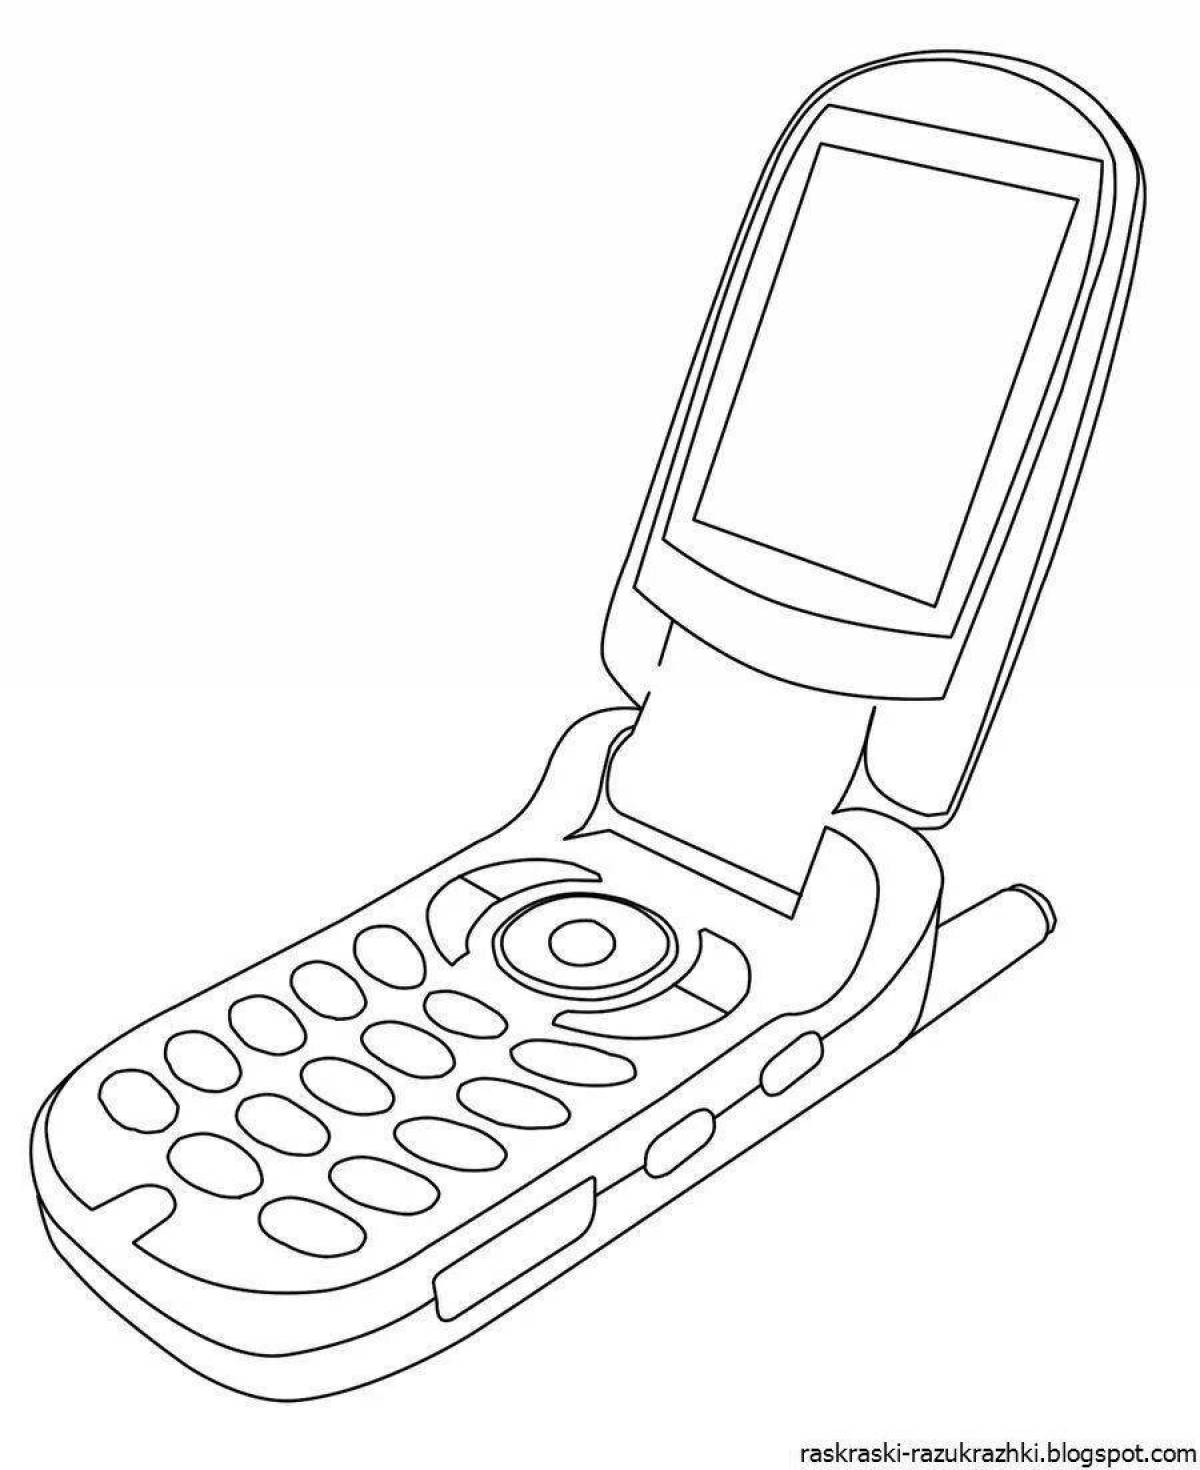 Cell phone for children #19